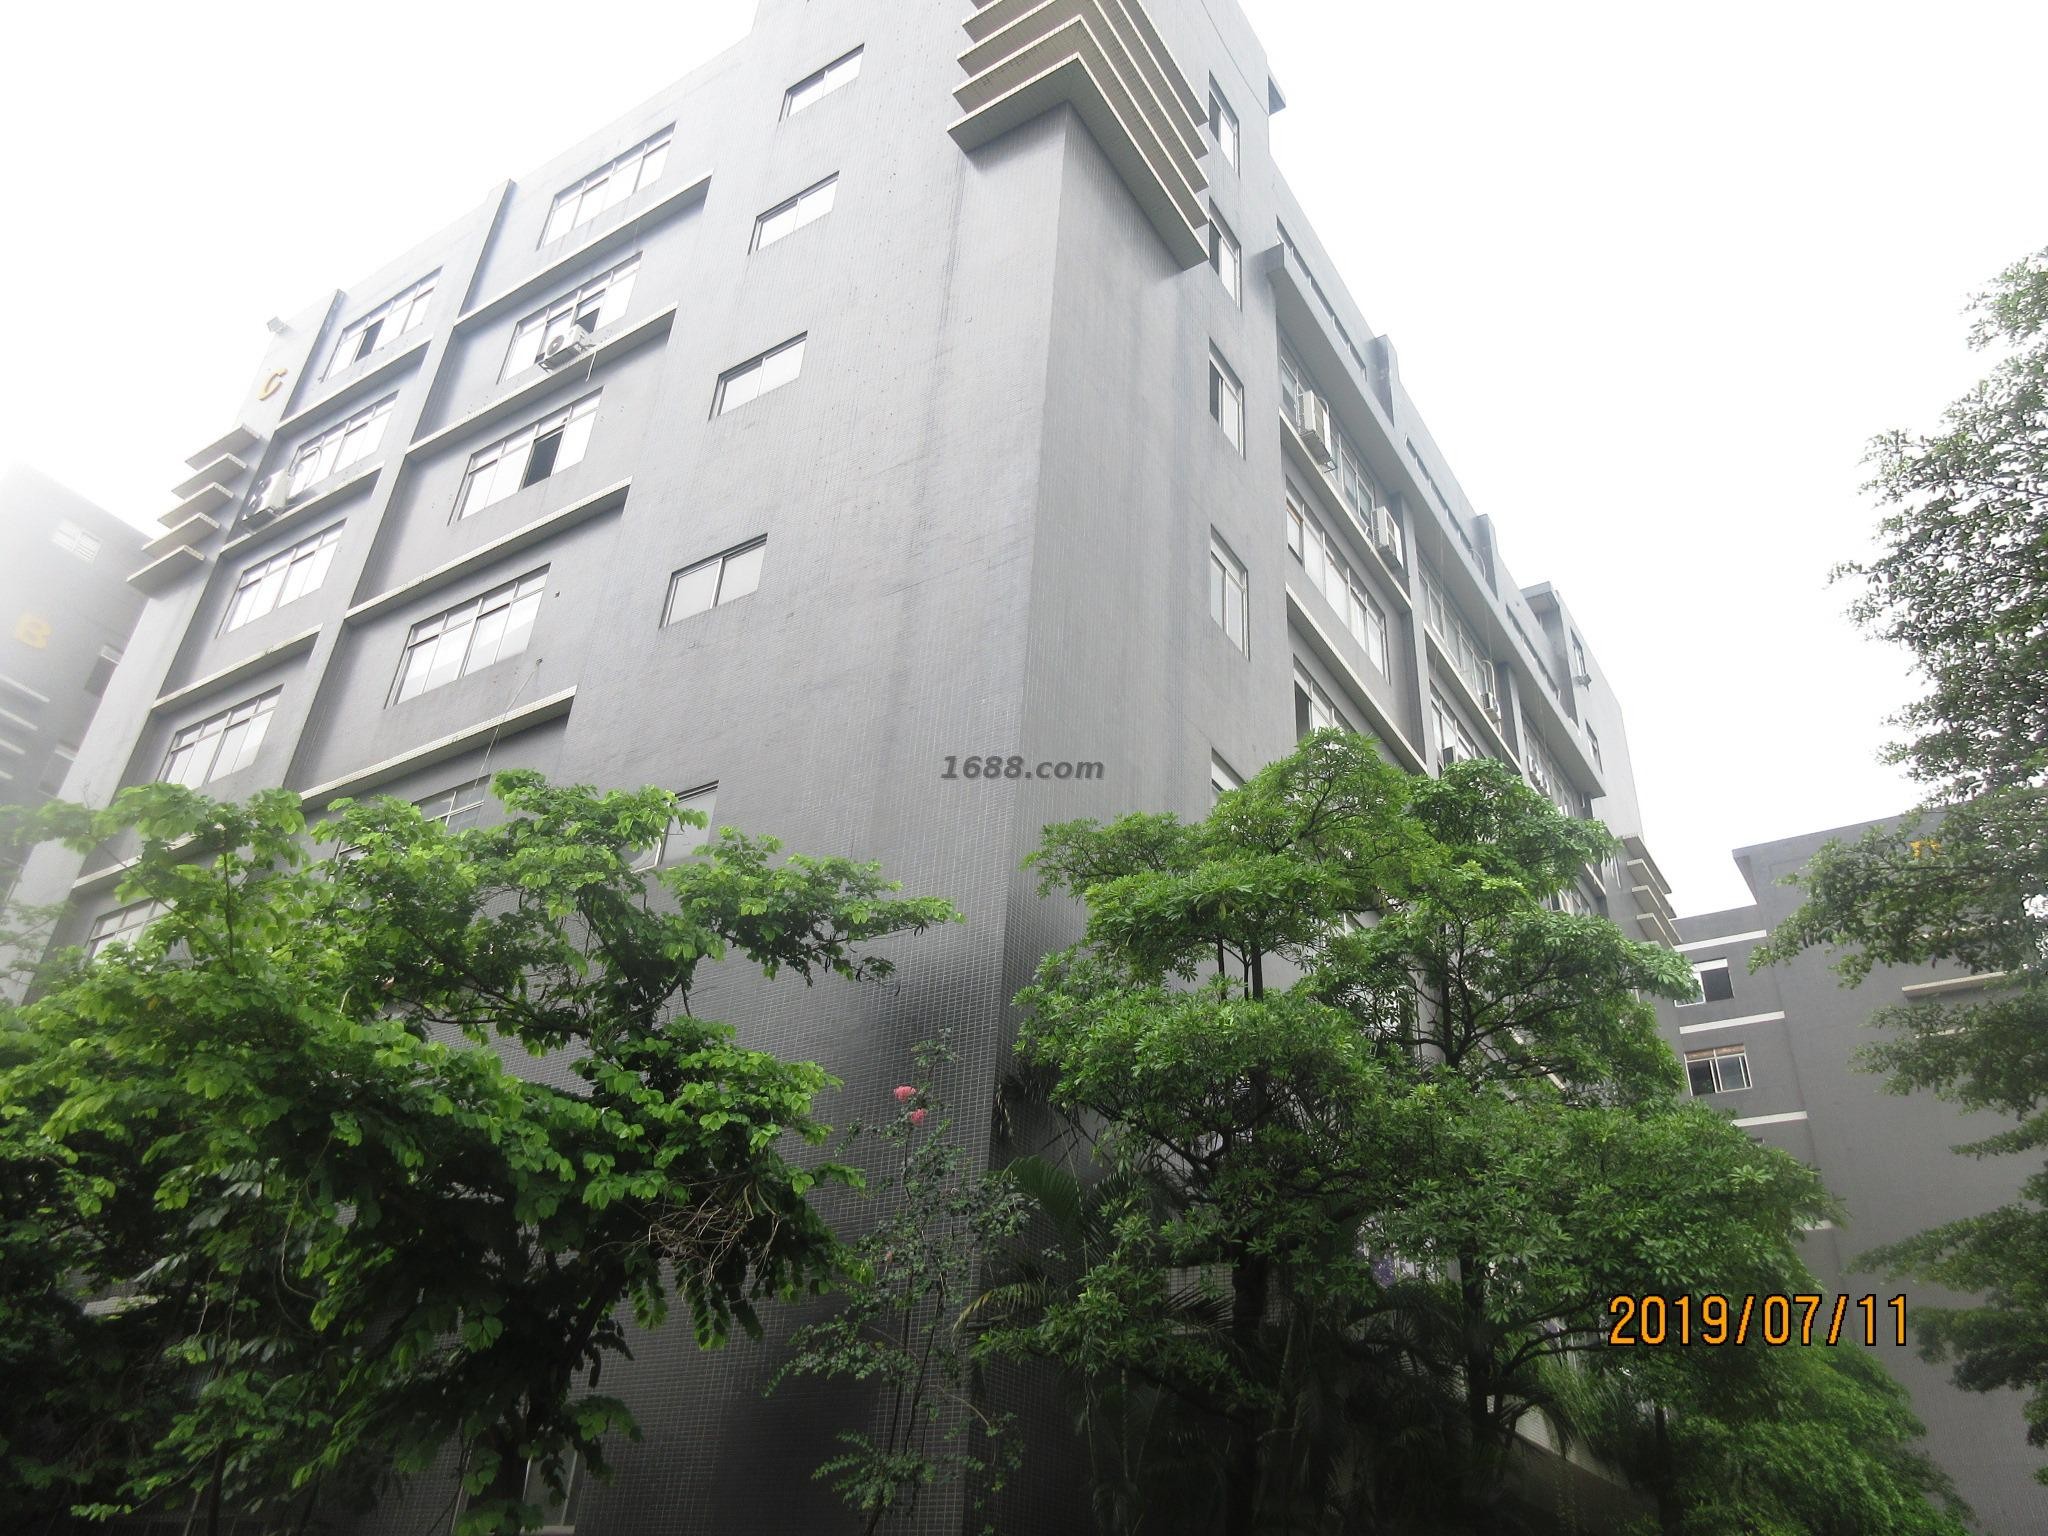 Shenzhen MAUSTOR Technology Co., Ltd.